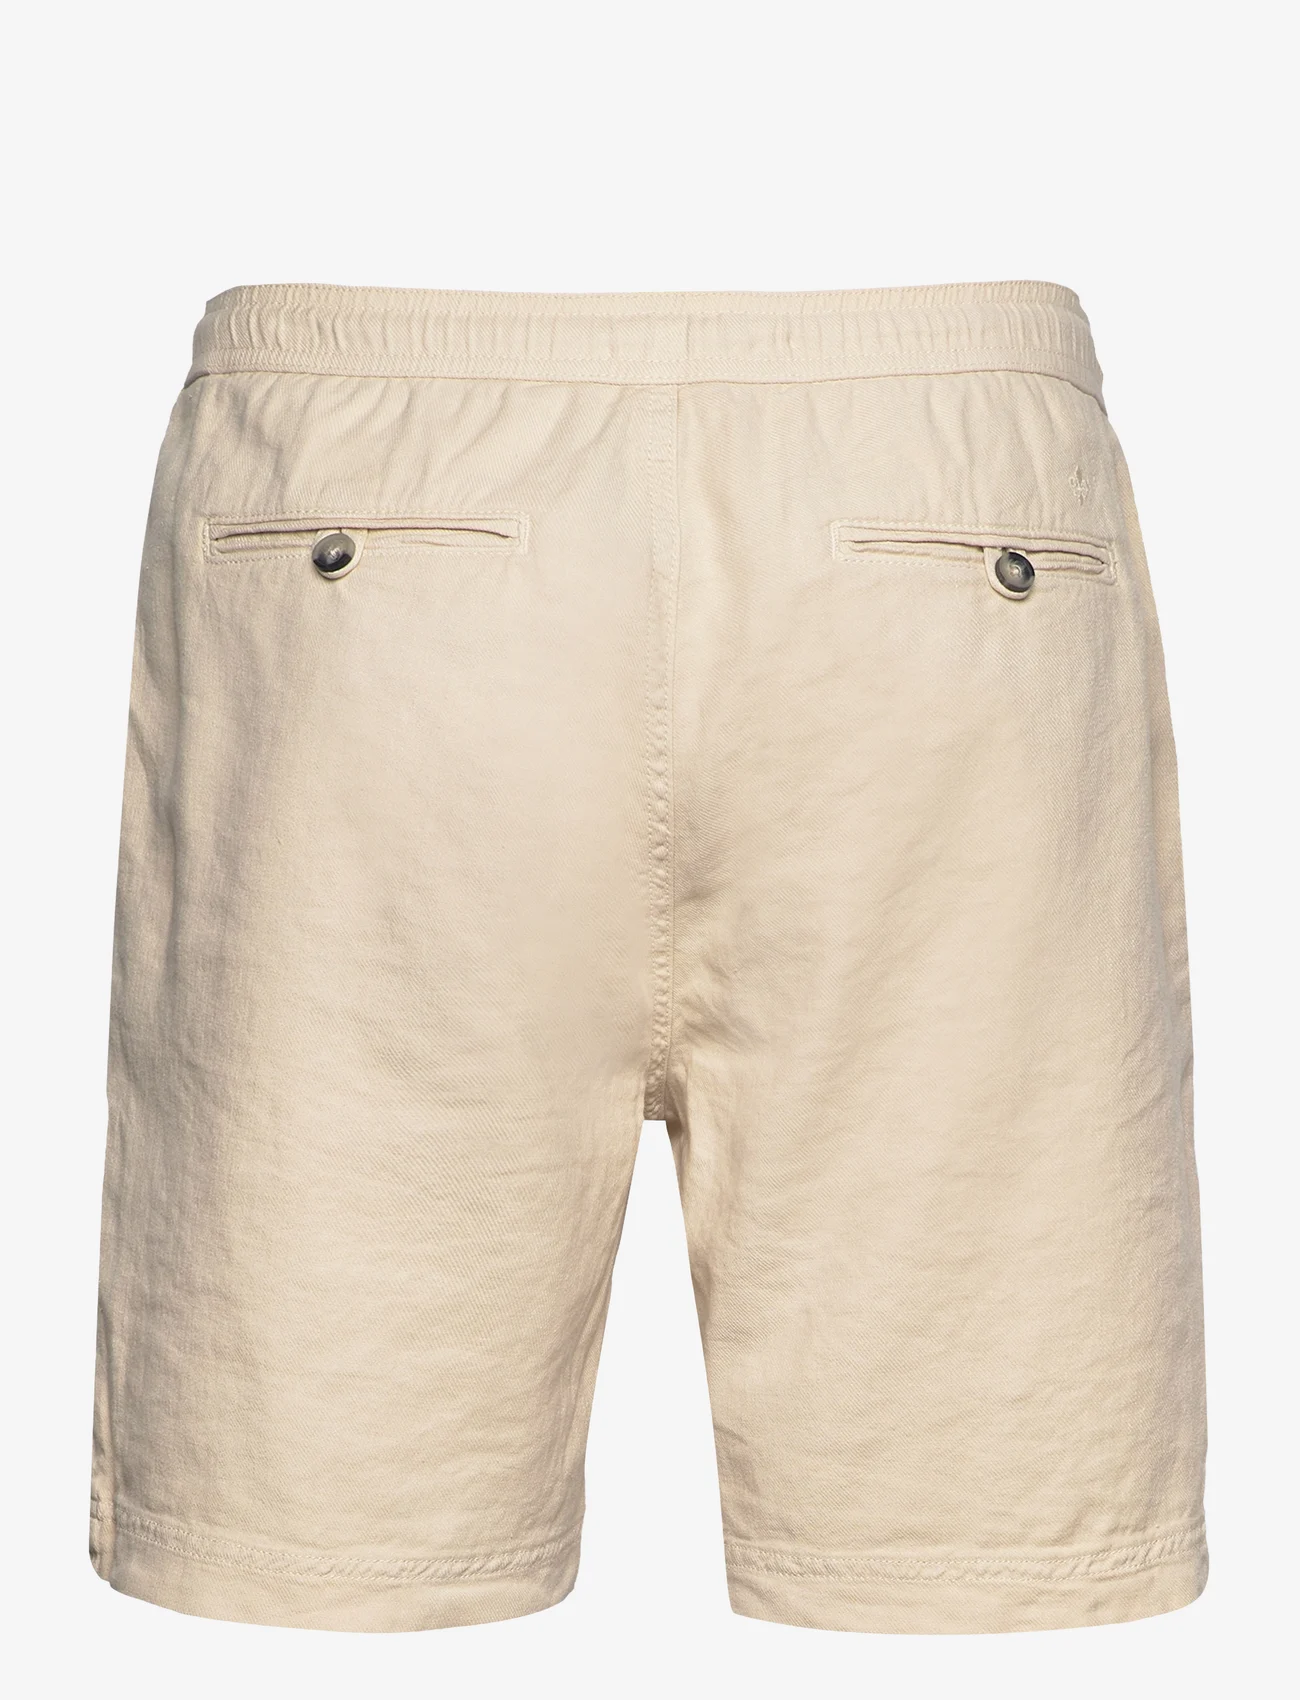 Morris - Fenix Linen Shorts - leinen-shorts - off white - 1